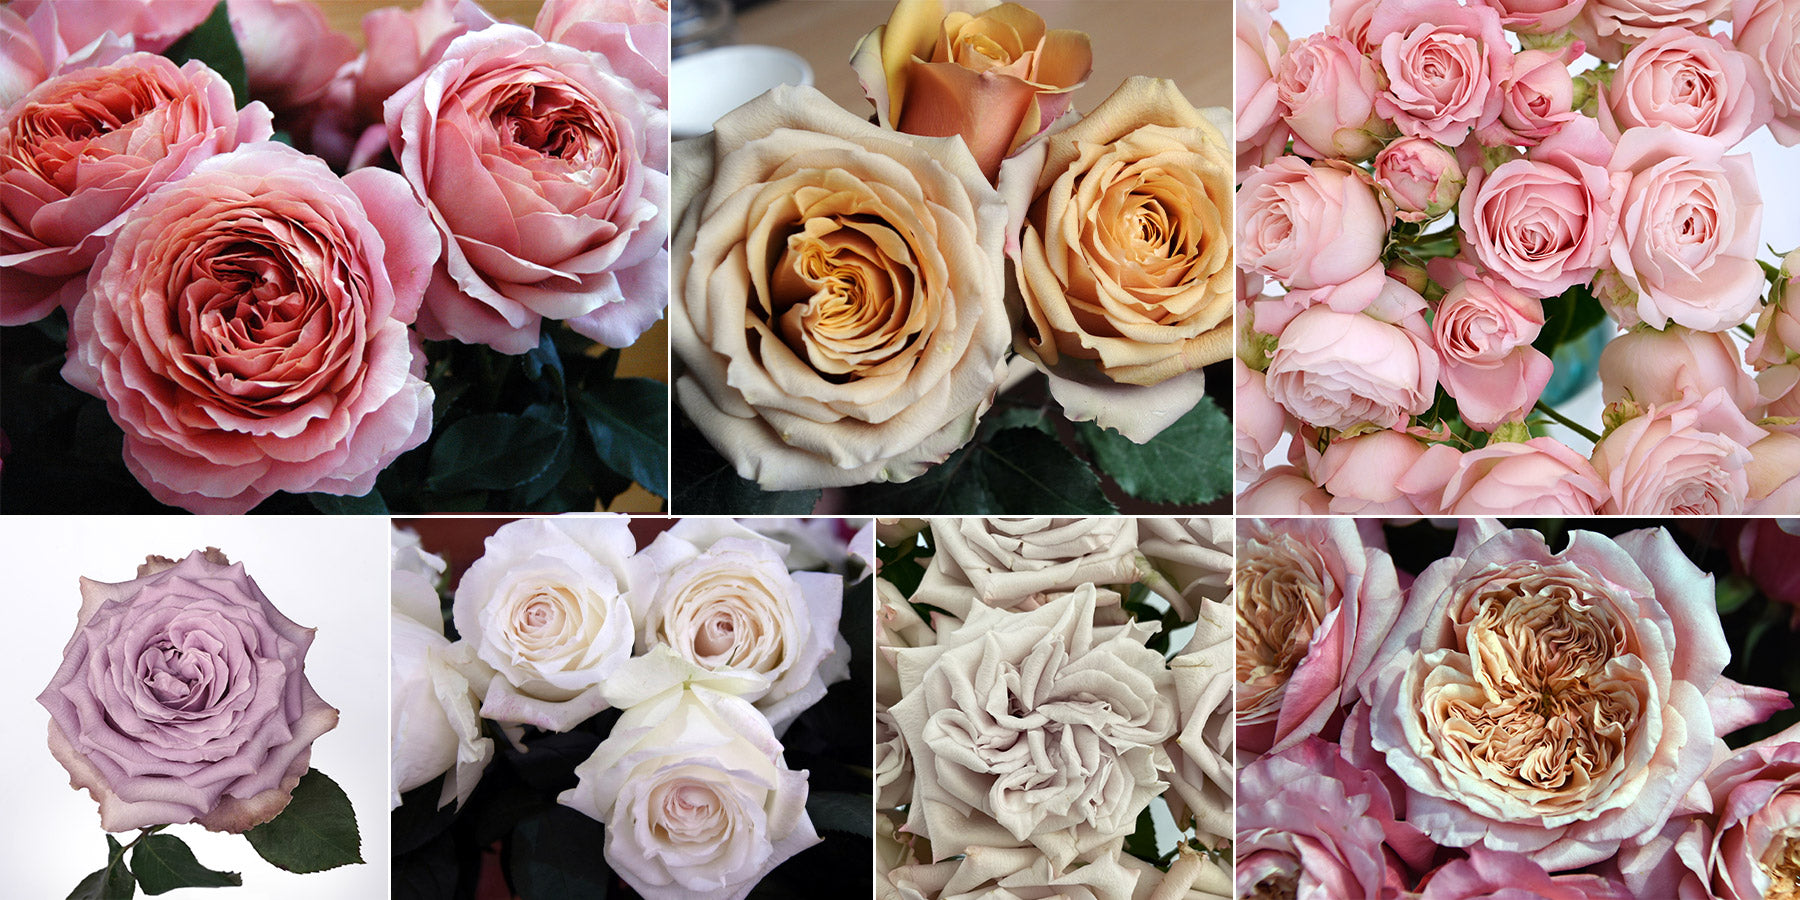 Variety of garden roses by Alexandra Farms